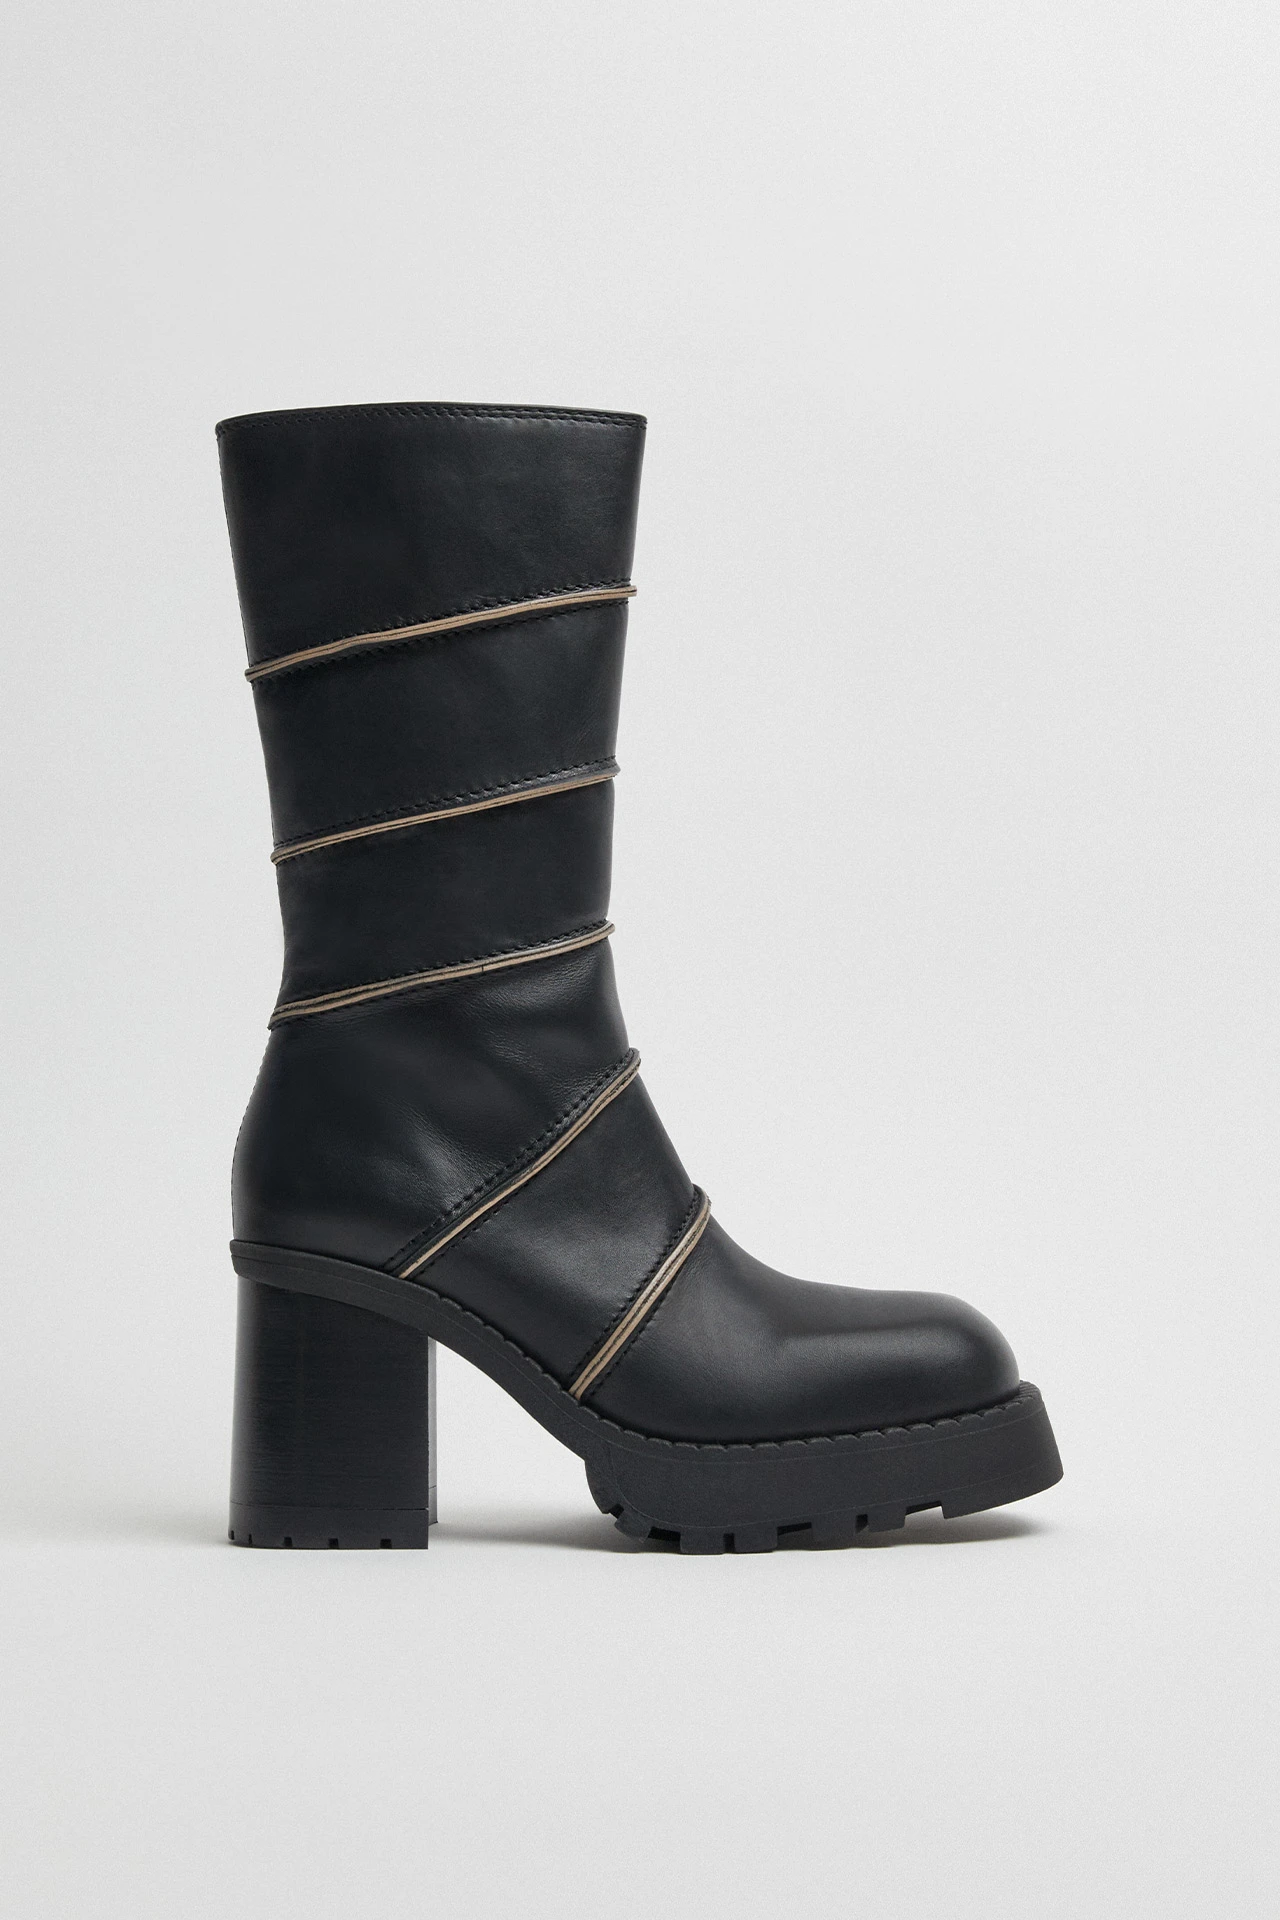 E8-graciane-black-boots-01